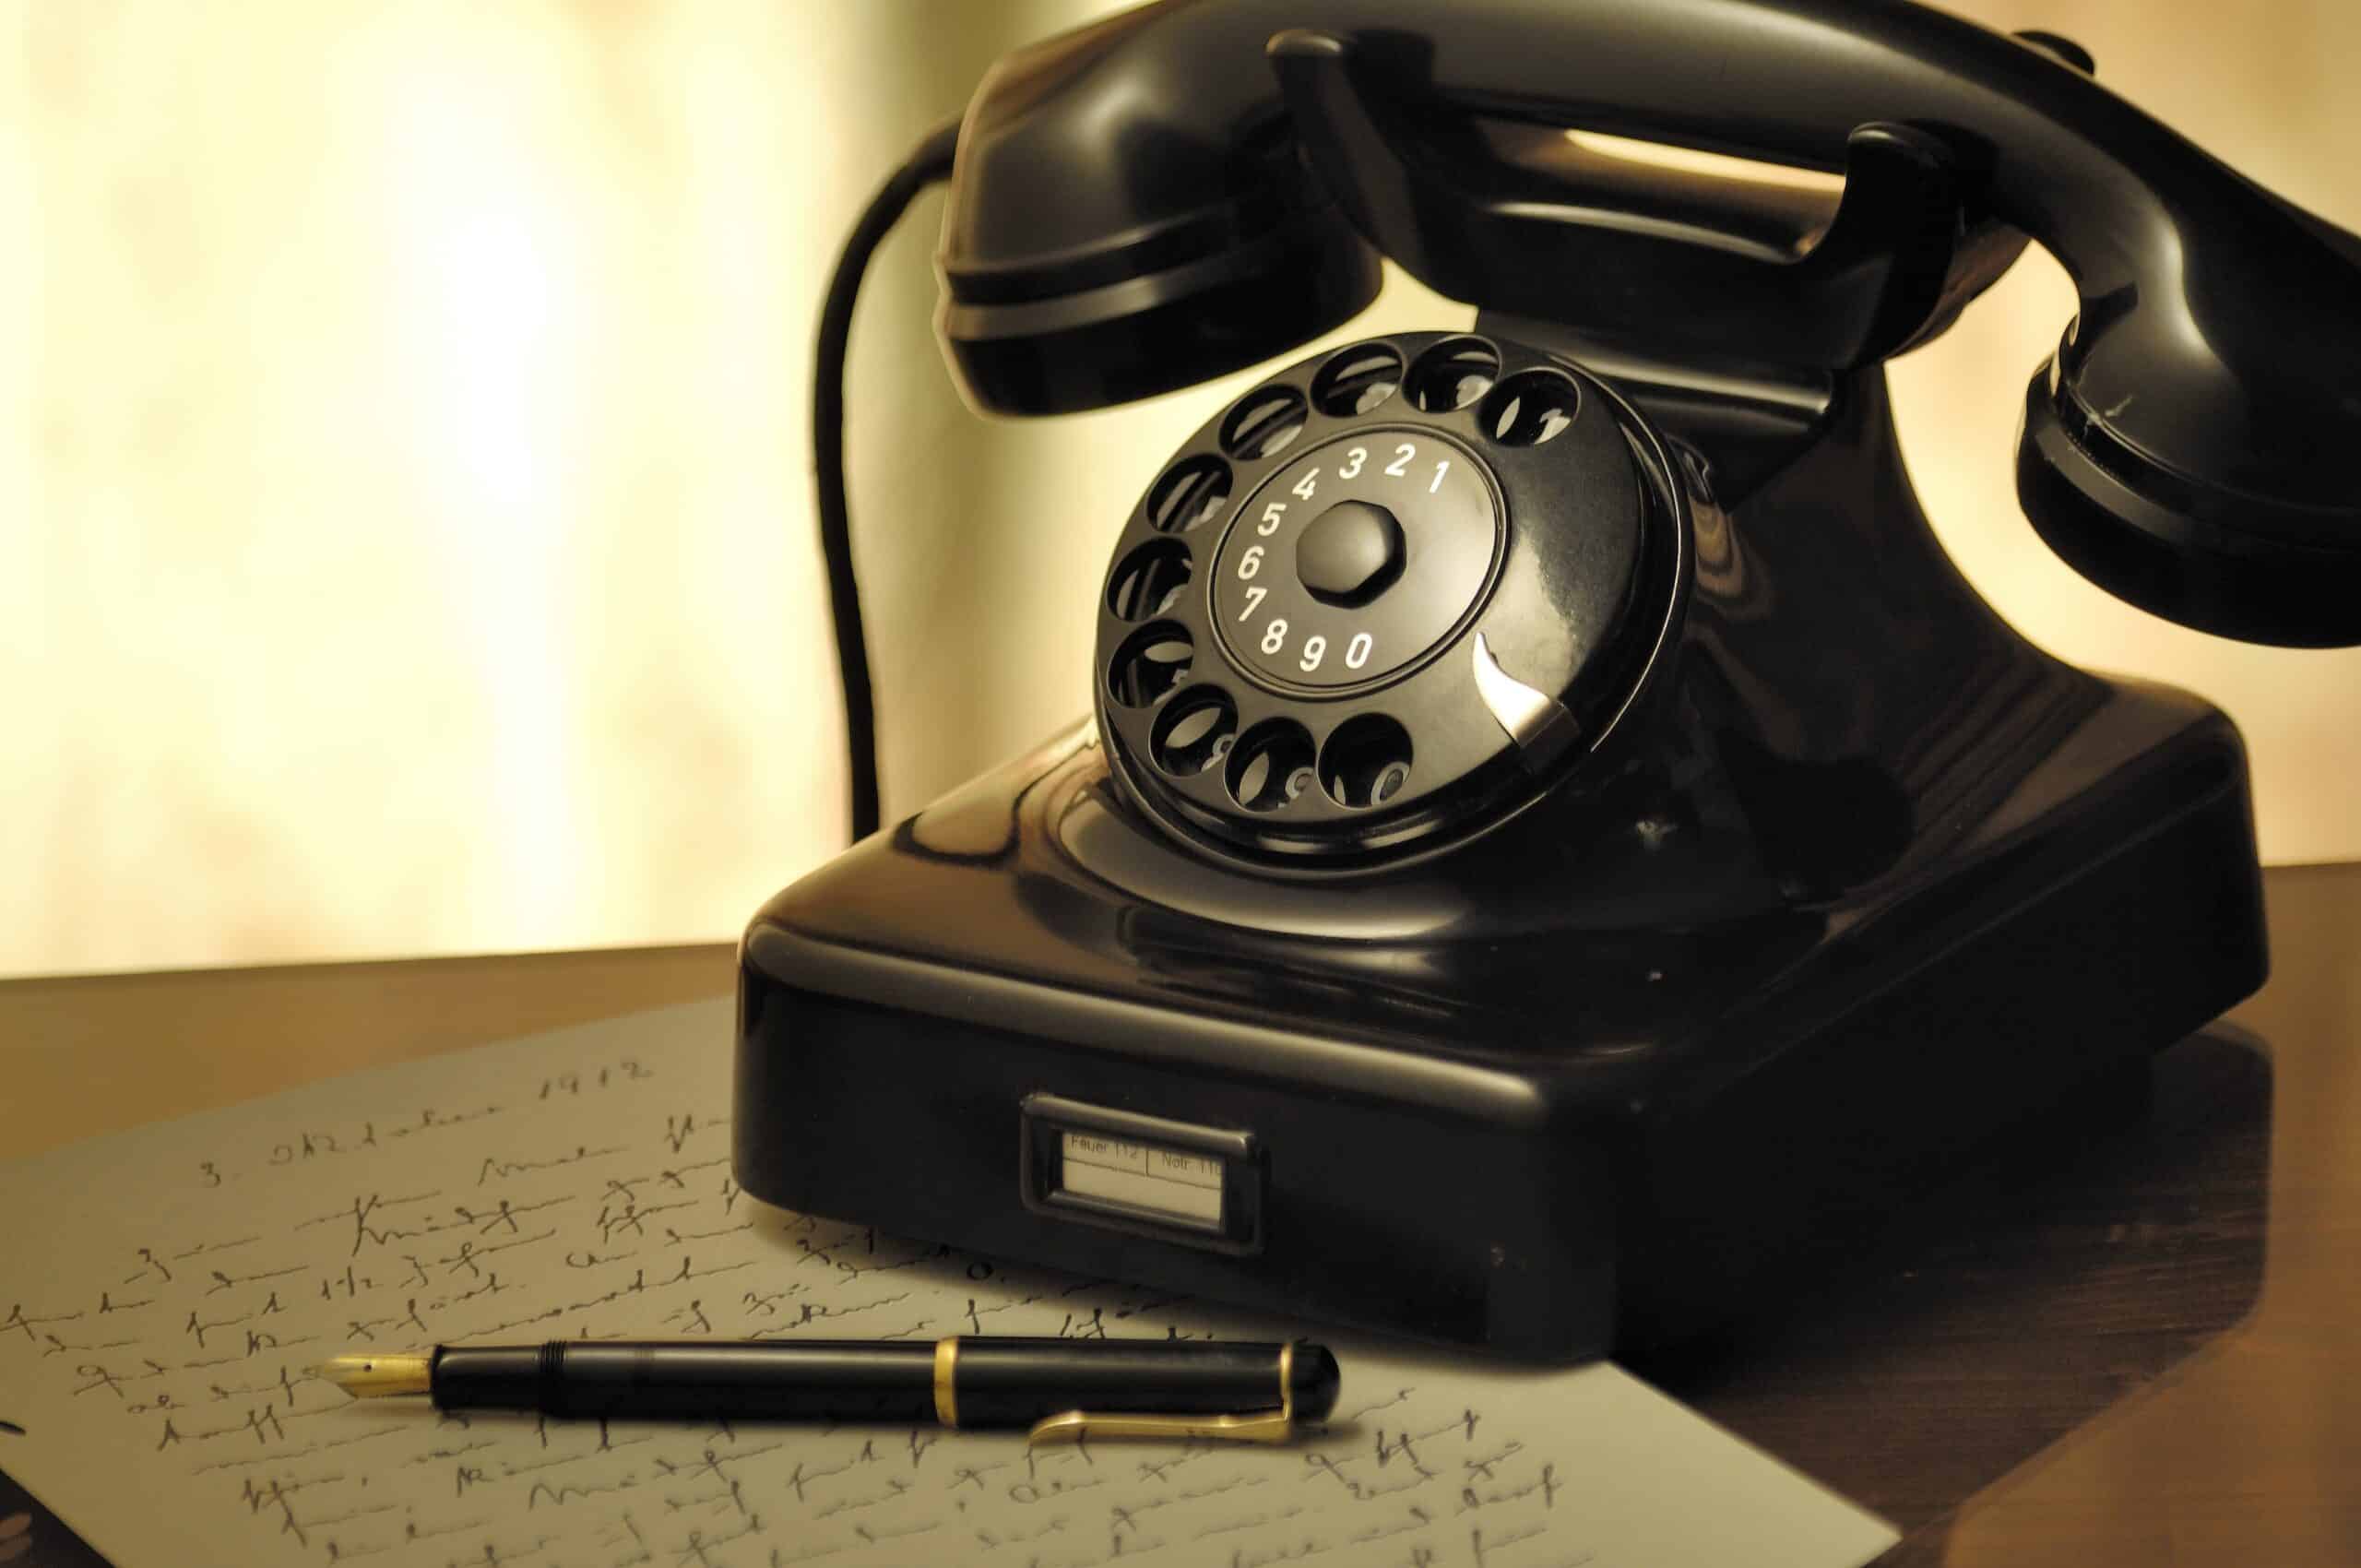 Old Telephone Image